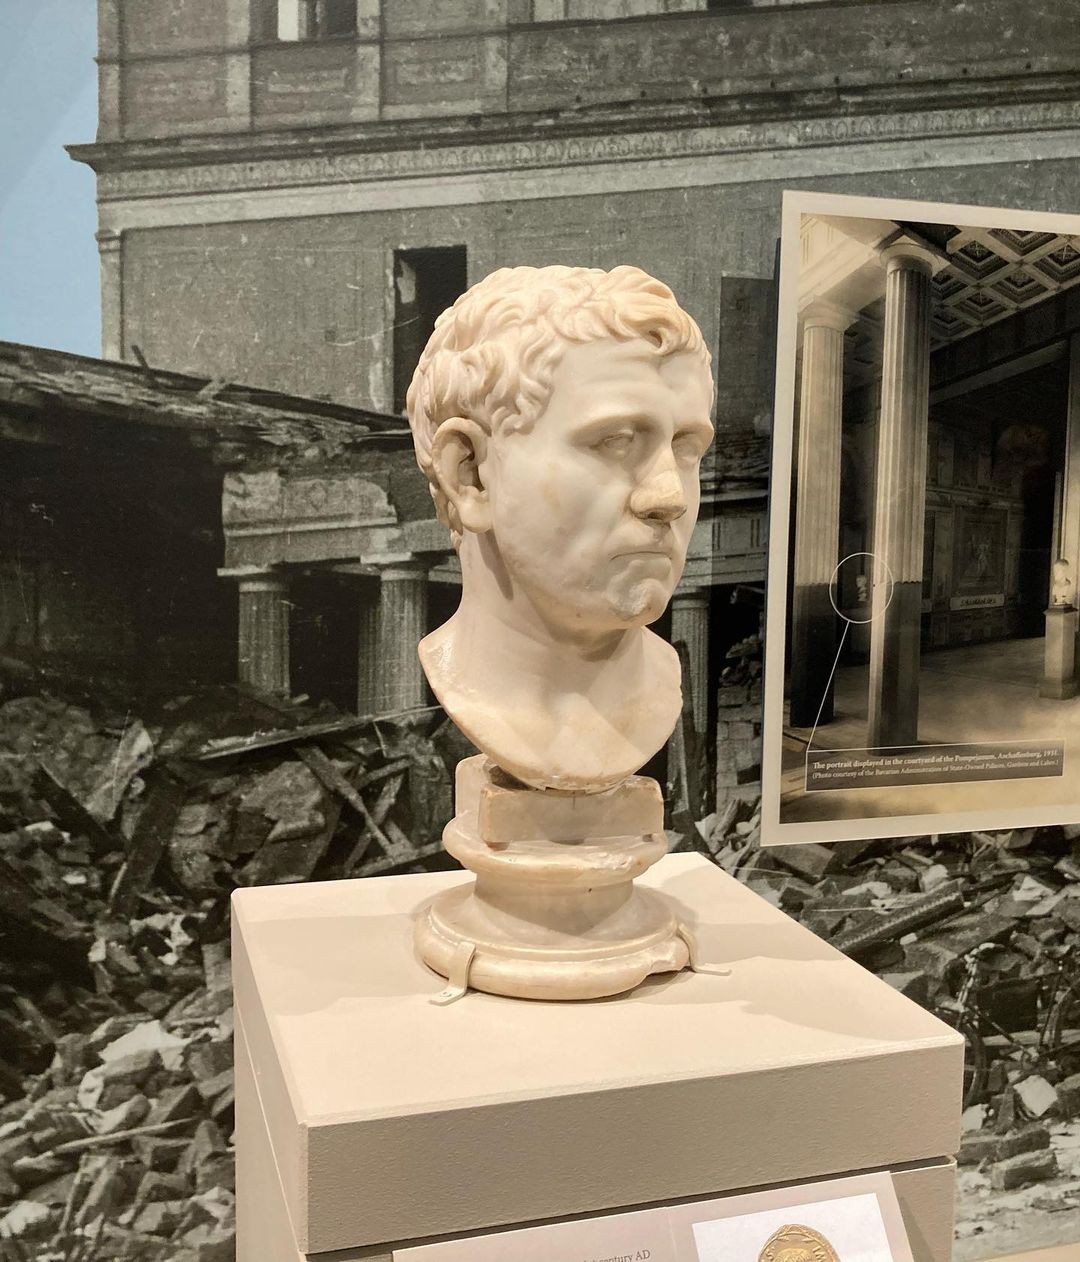 Busto romano foi encontrado no brechó Goodwill nos EUA (Foto: Instagram/@templeofvintage)